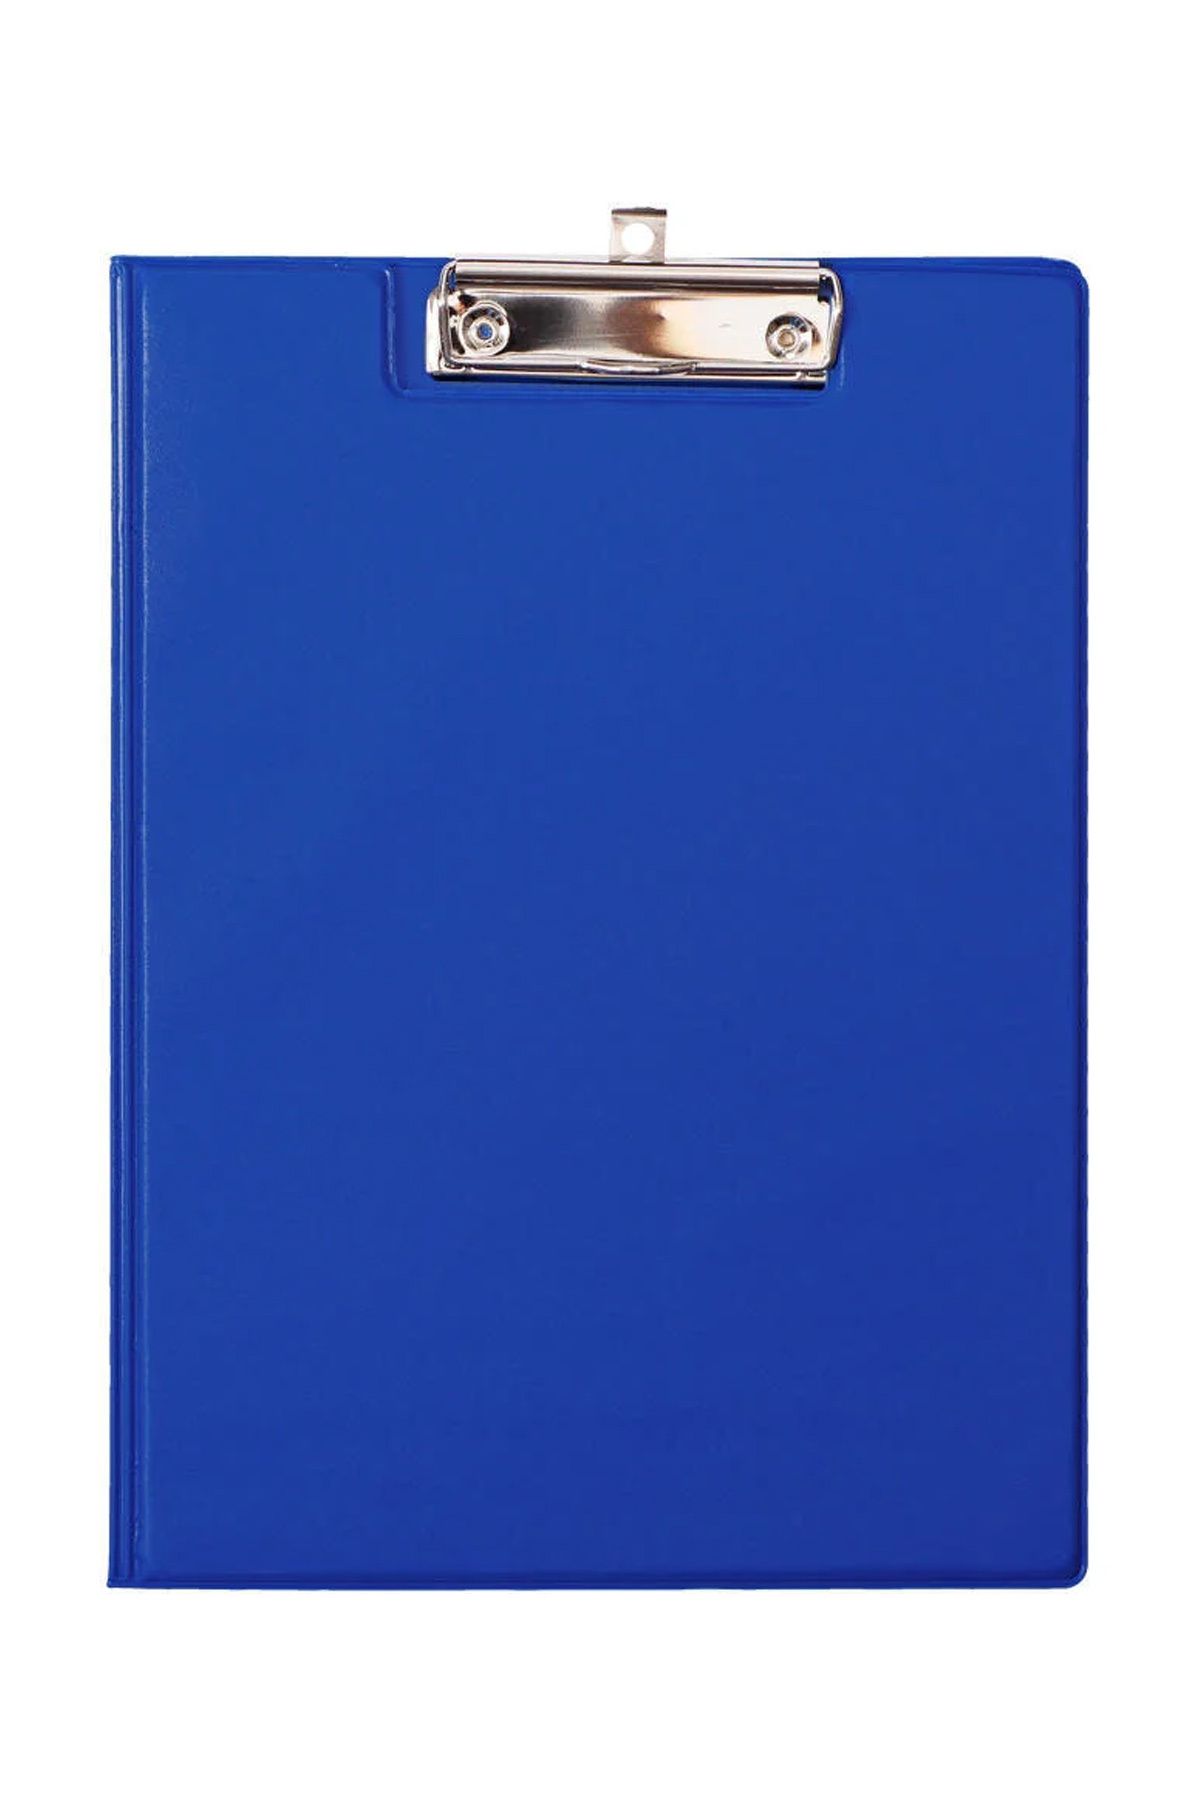 POLEXP Renkli Sekreterlik Dosya Kapaklı Mavi A4